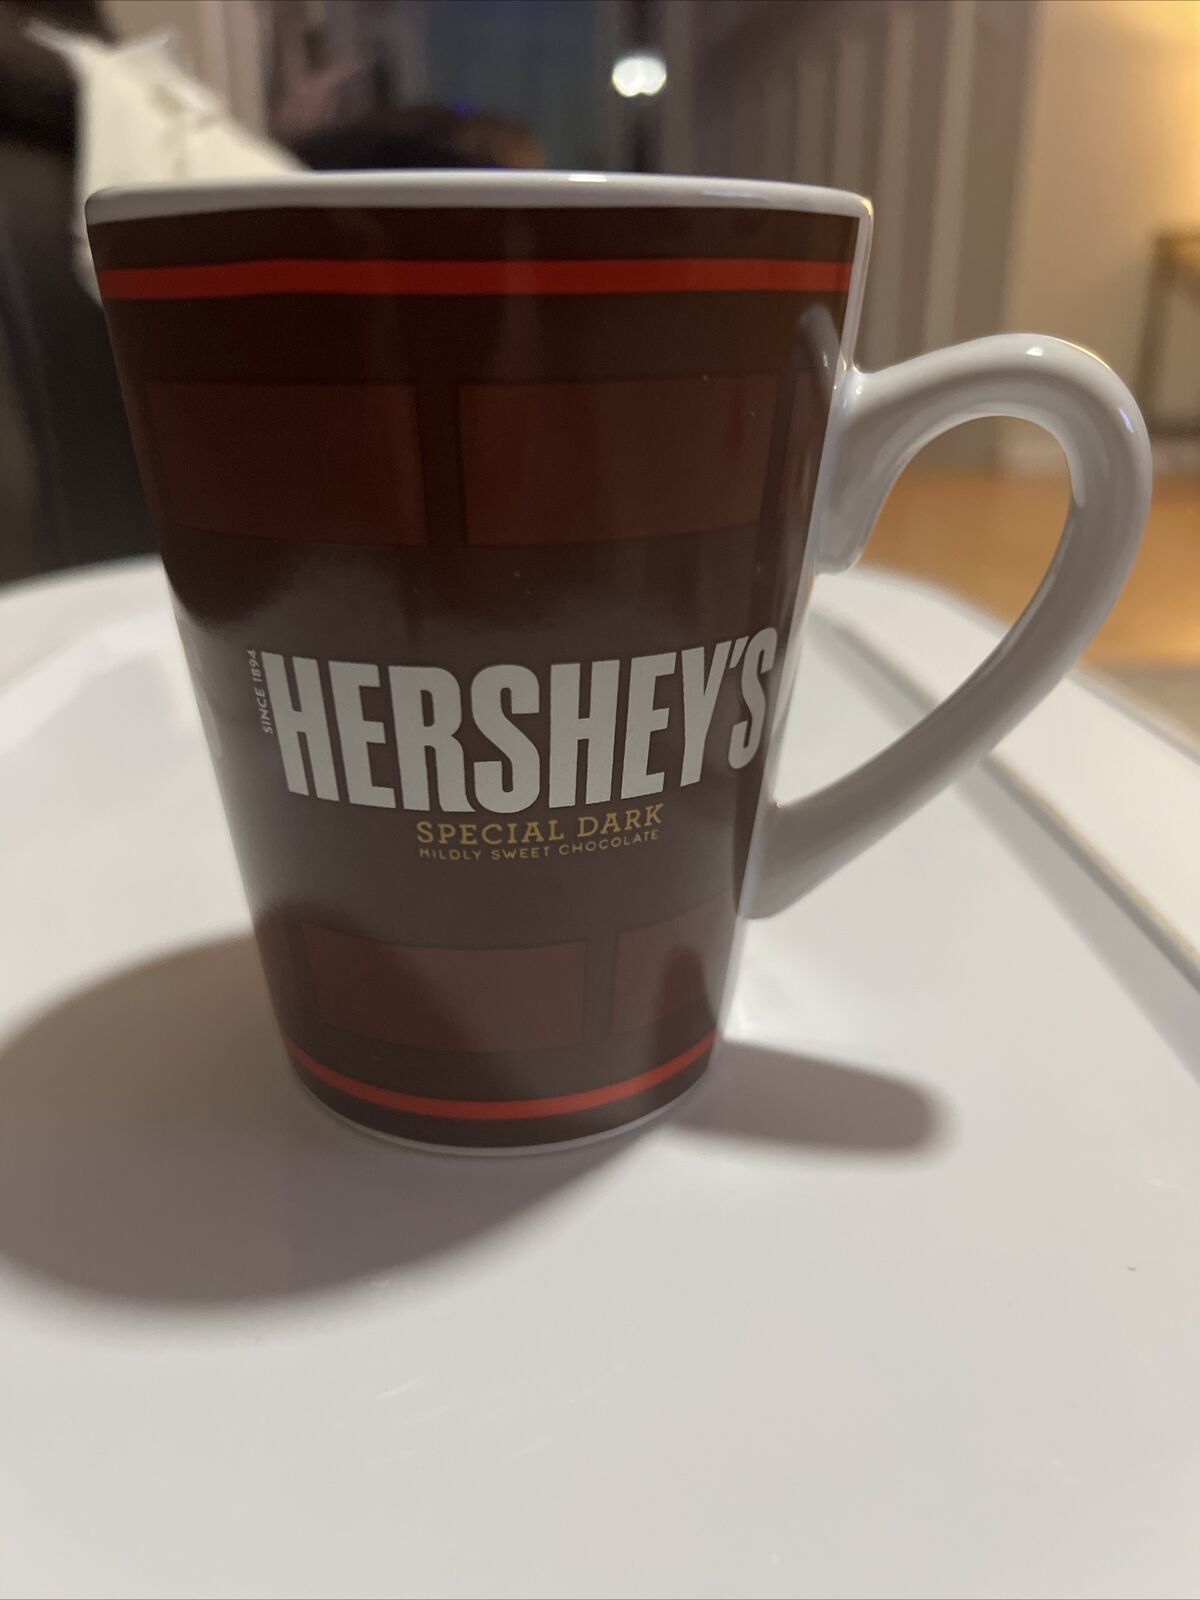 Hershey's Special Dark Chocolate Cup Mug Galerie Holds 12 floz